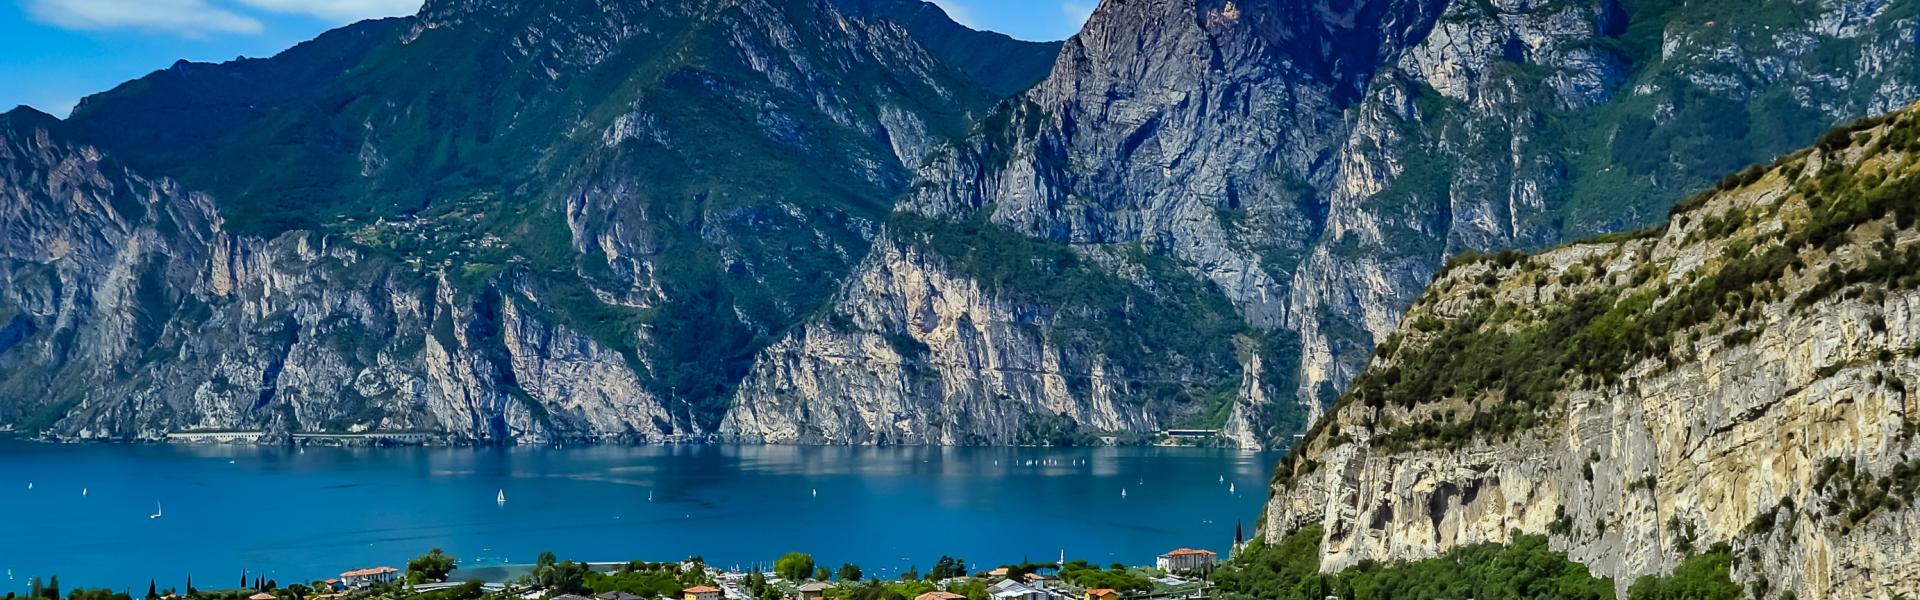 Self catering accommodation in Lake Garda for your Italian adventure - Casamundo